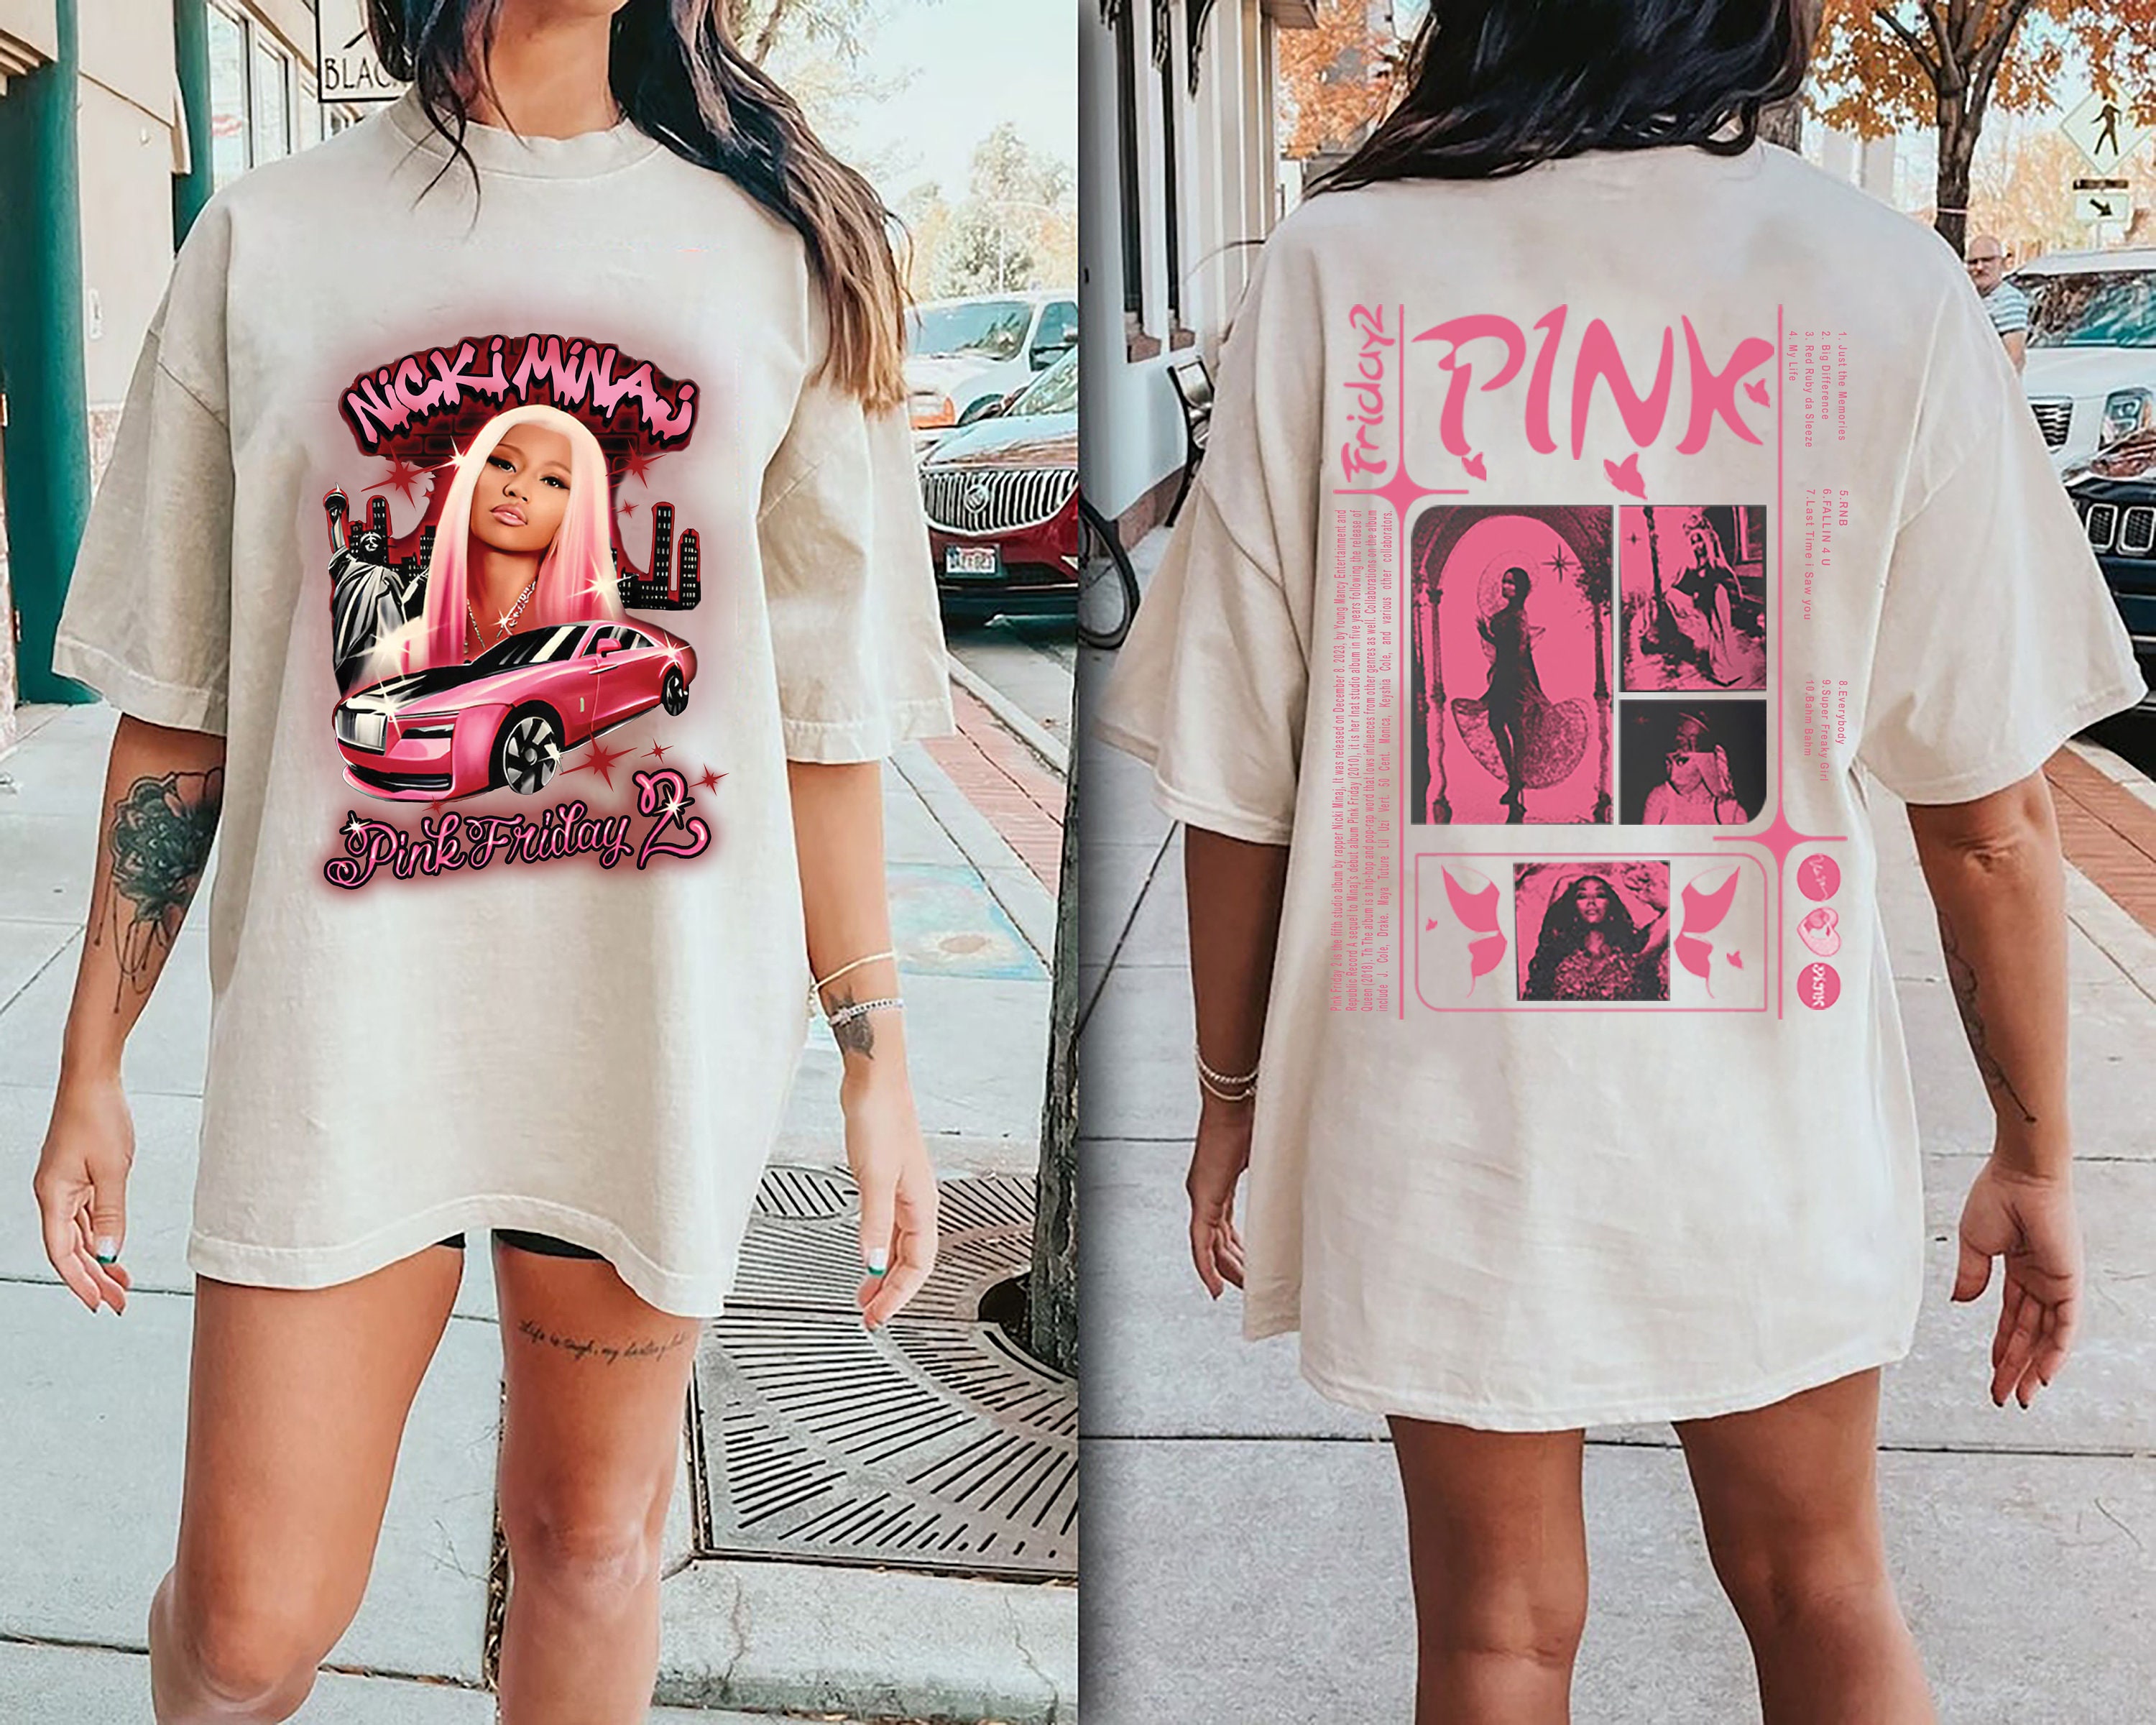 Vintage Nicki Minaj Pink Friday 2 Tour Shirt, Retro Nicki Minaj World Shirt